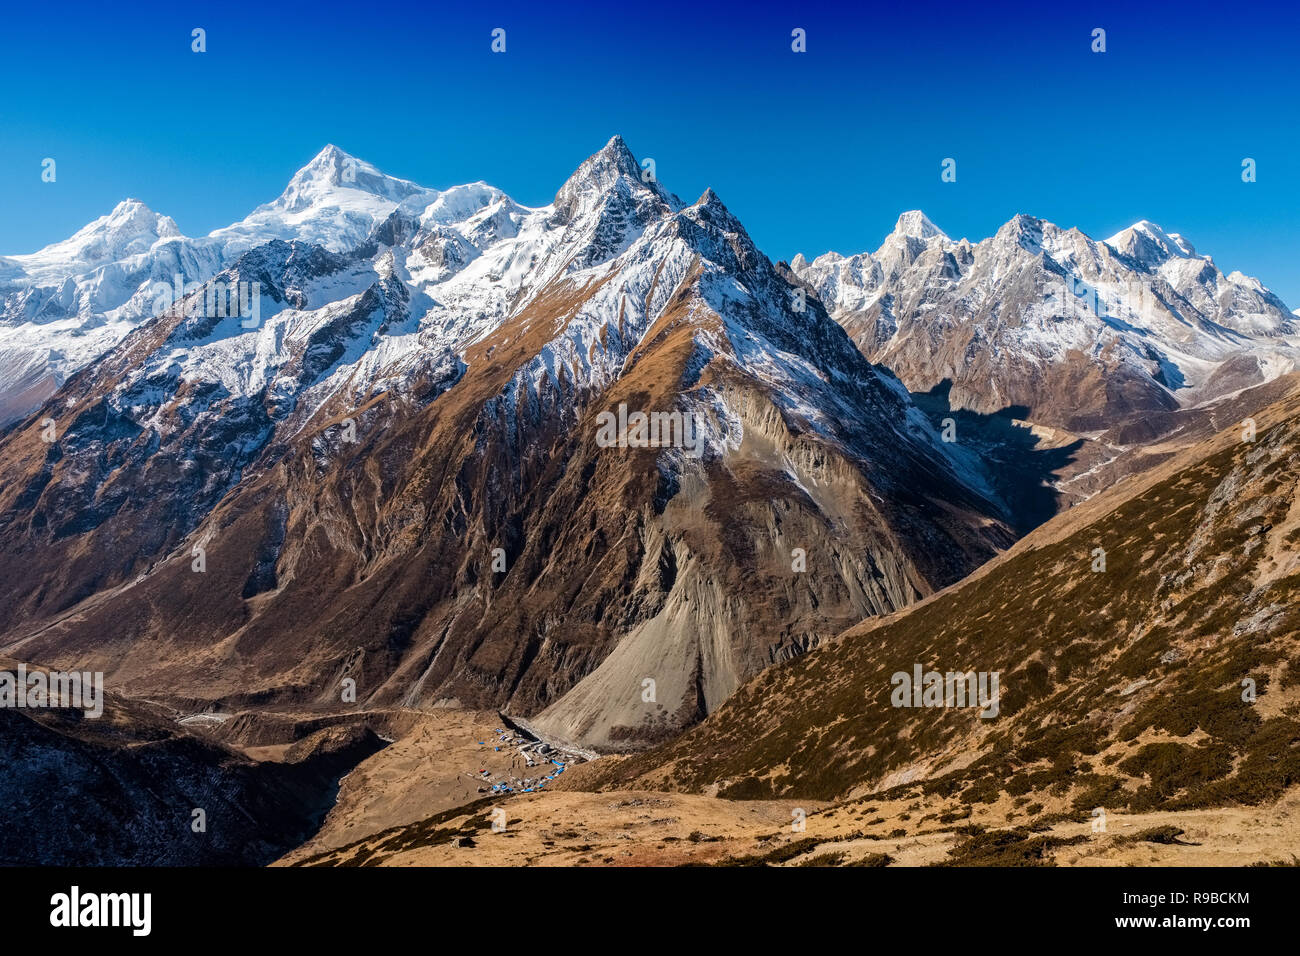 The Manaslu group of mountains with the village of Samdo in the valley. Manaslu Circuit trek, Nepal Himalayas Stock Photo